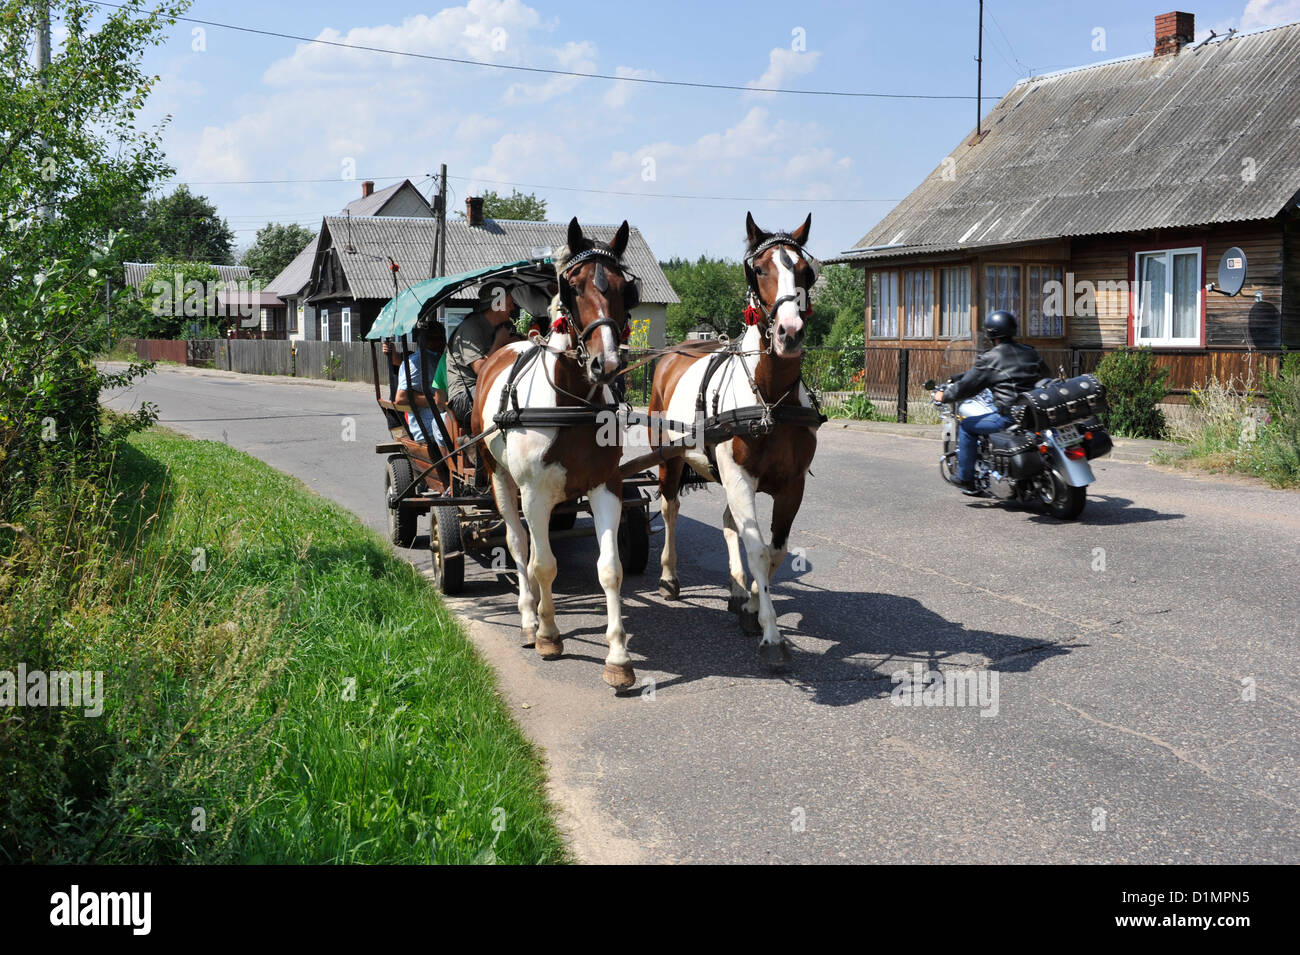 Outskirts of Bialowieza municipality in Eastern Poland. Horse-drawn cart. Stock Photo